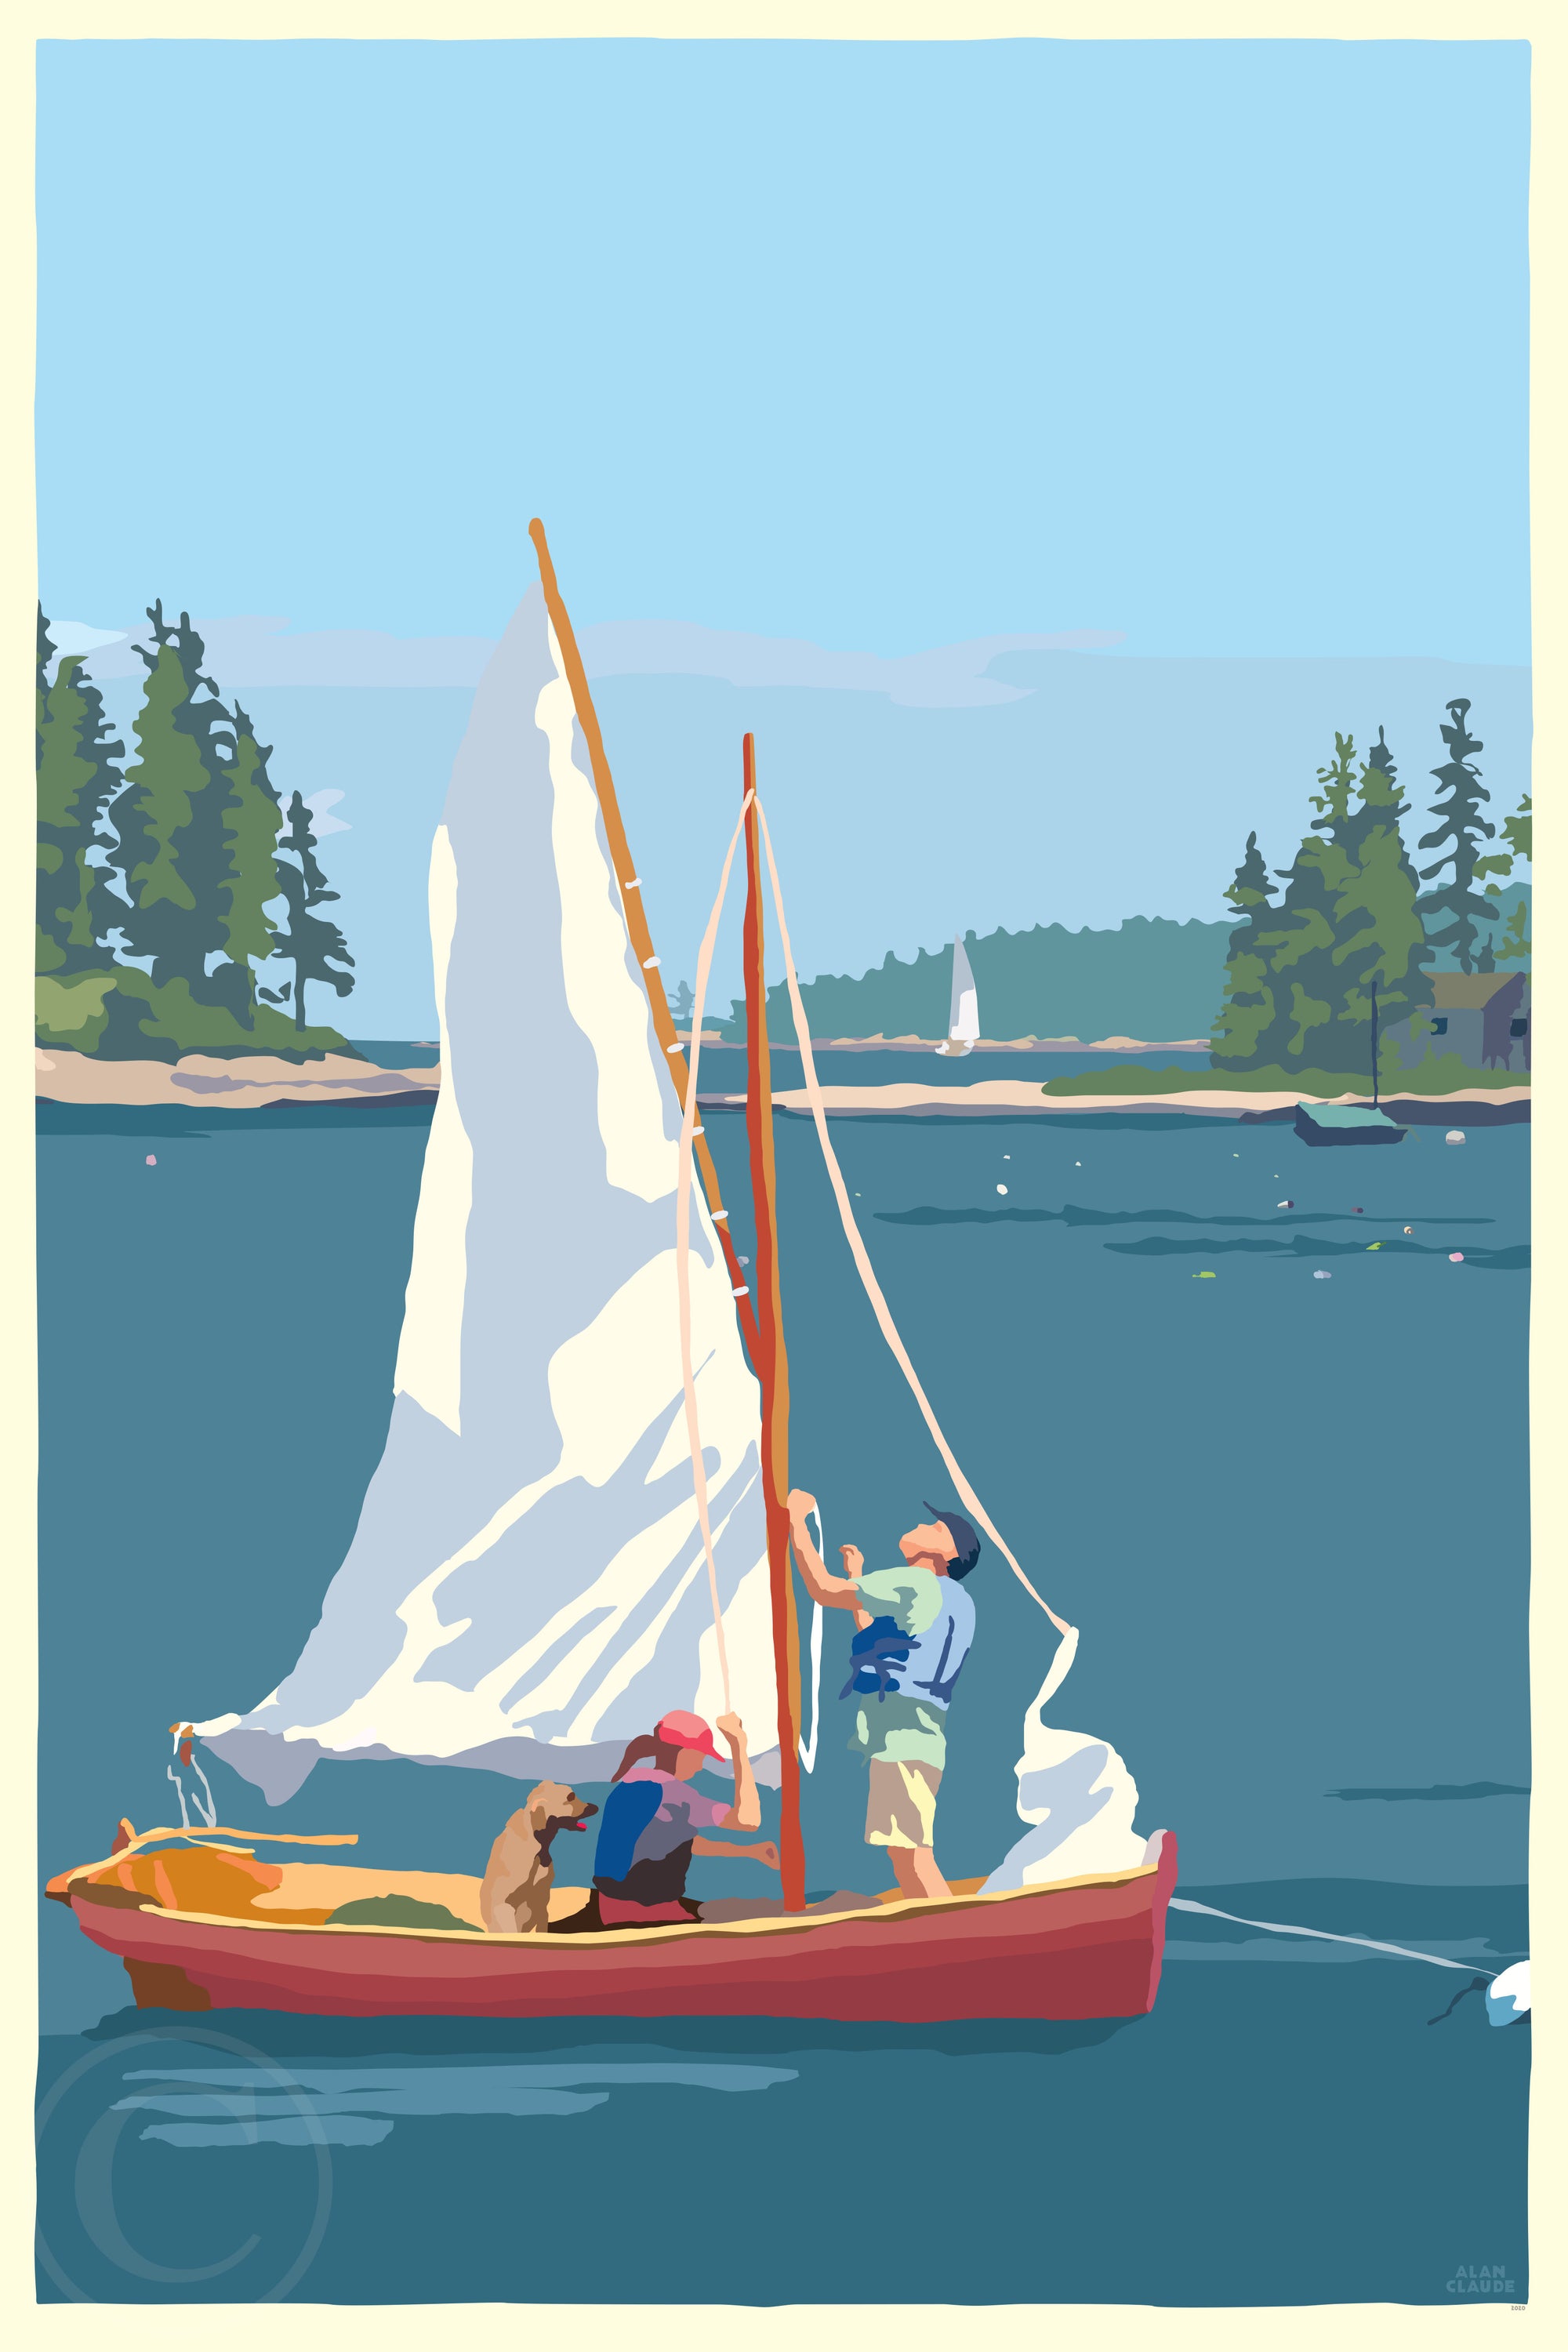 Hoist The Sail Art Print 36" x 53" Wall Poster By Alan Claude - Maine